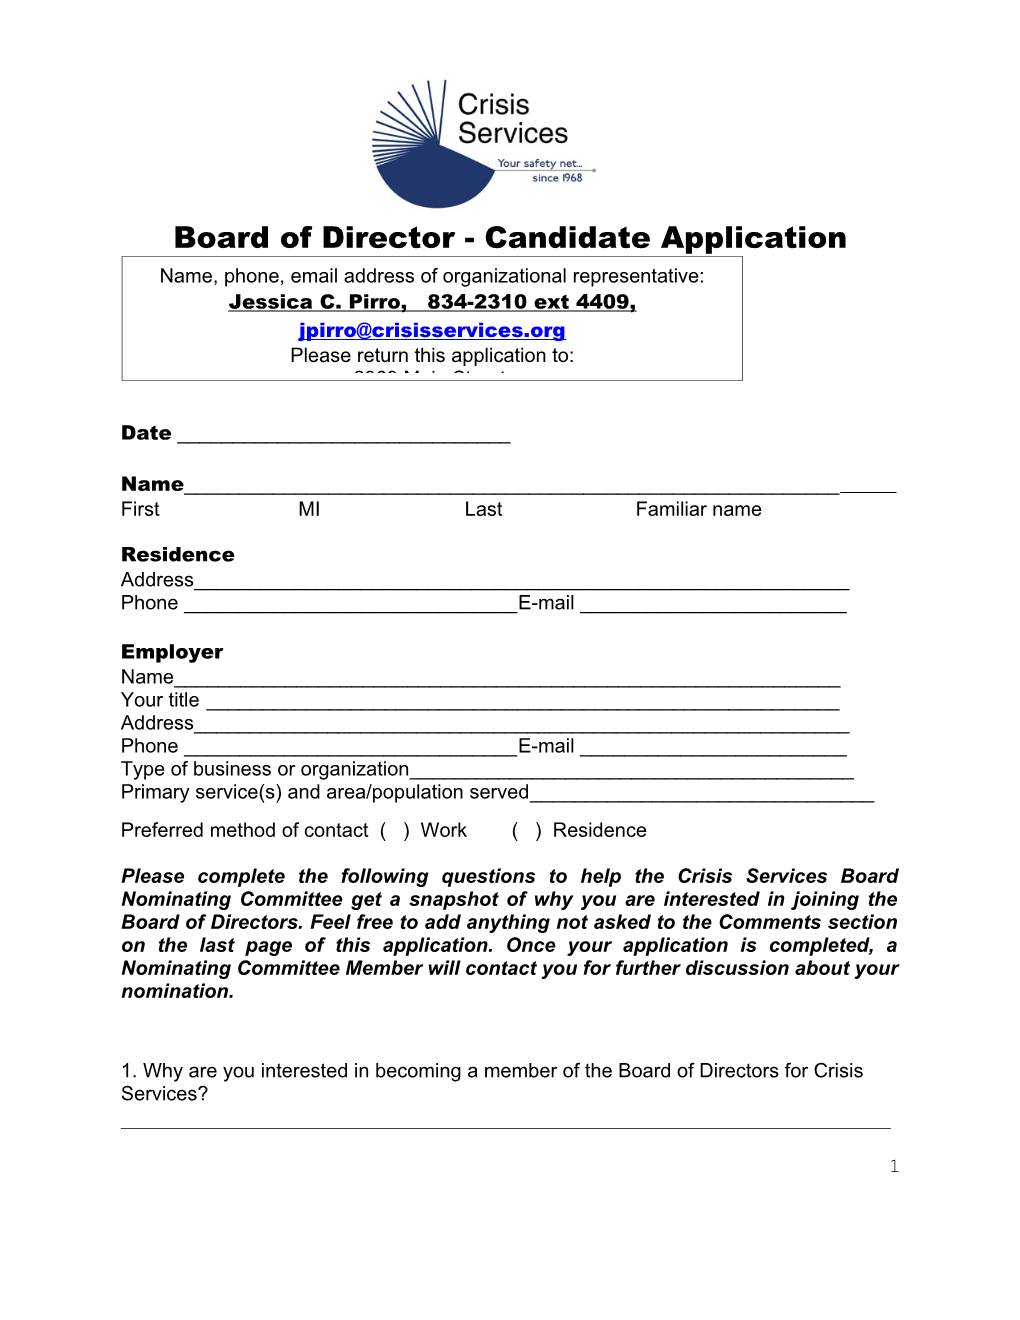 Board of Directors Application